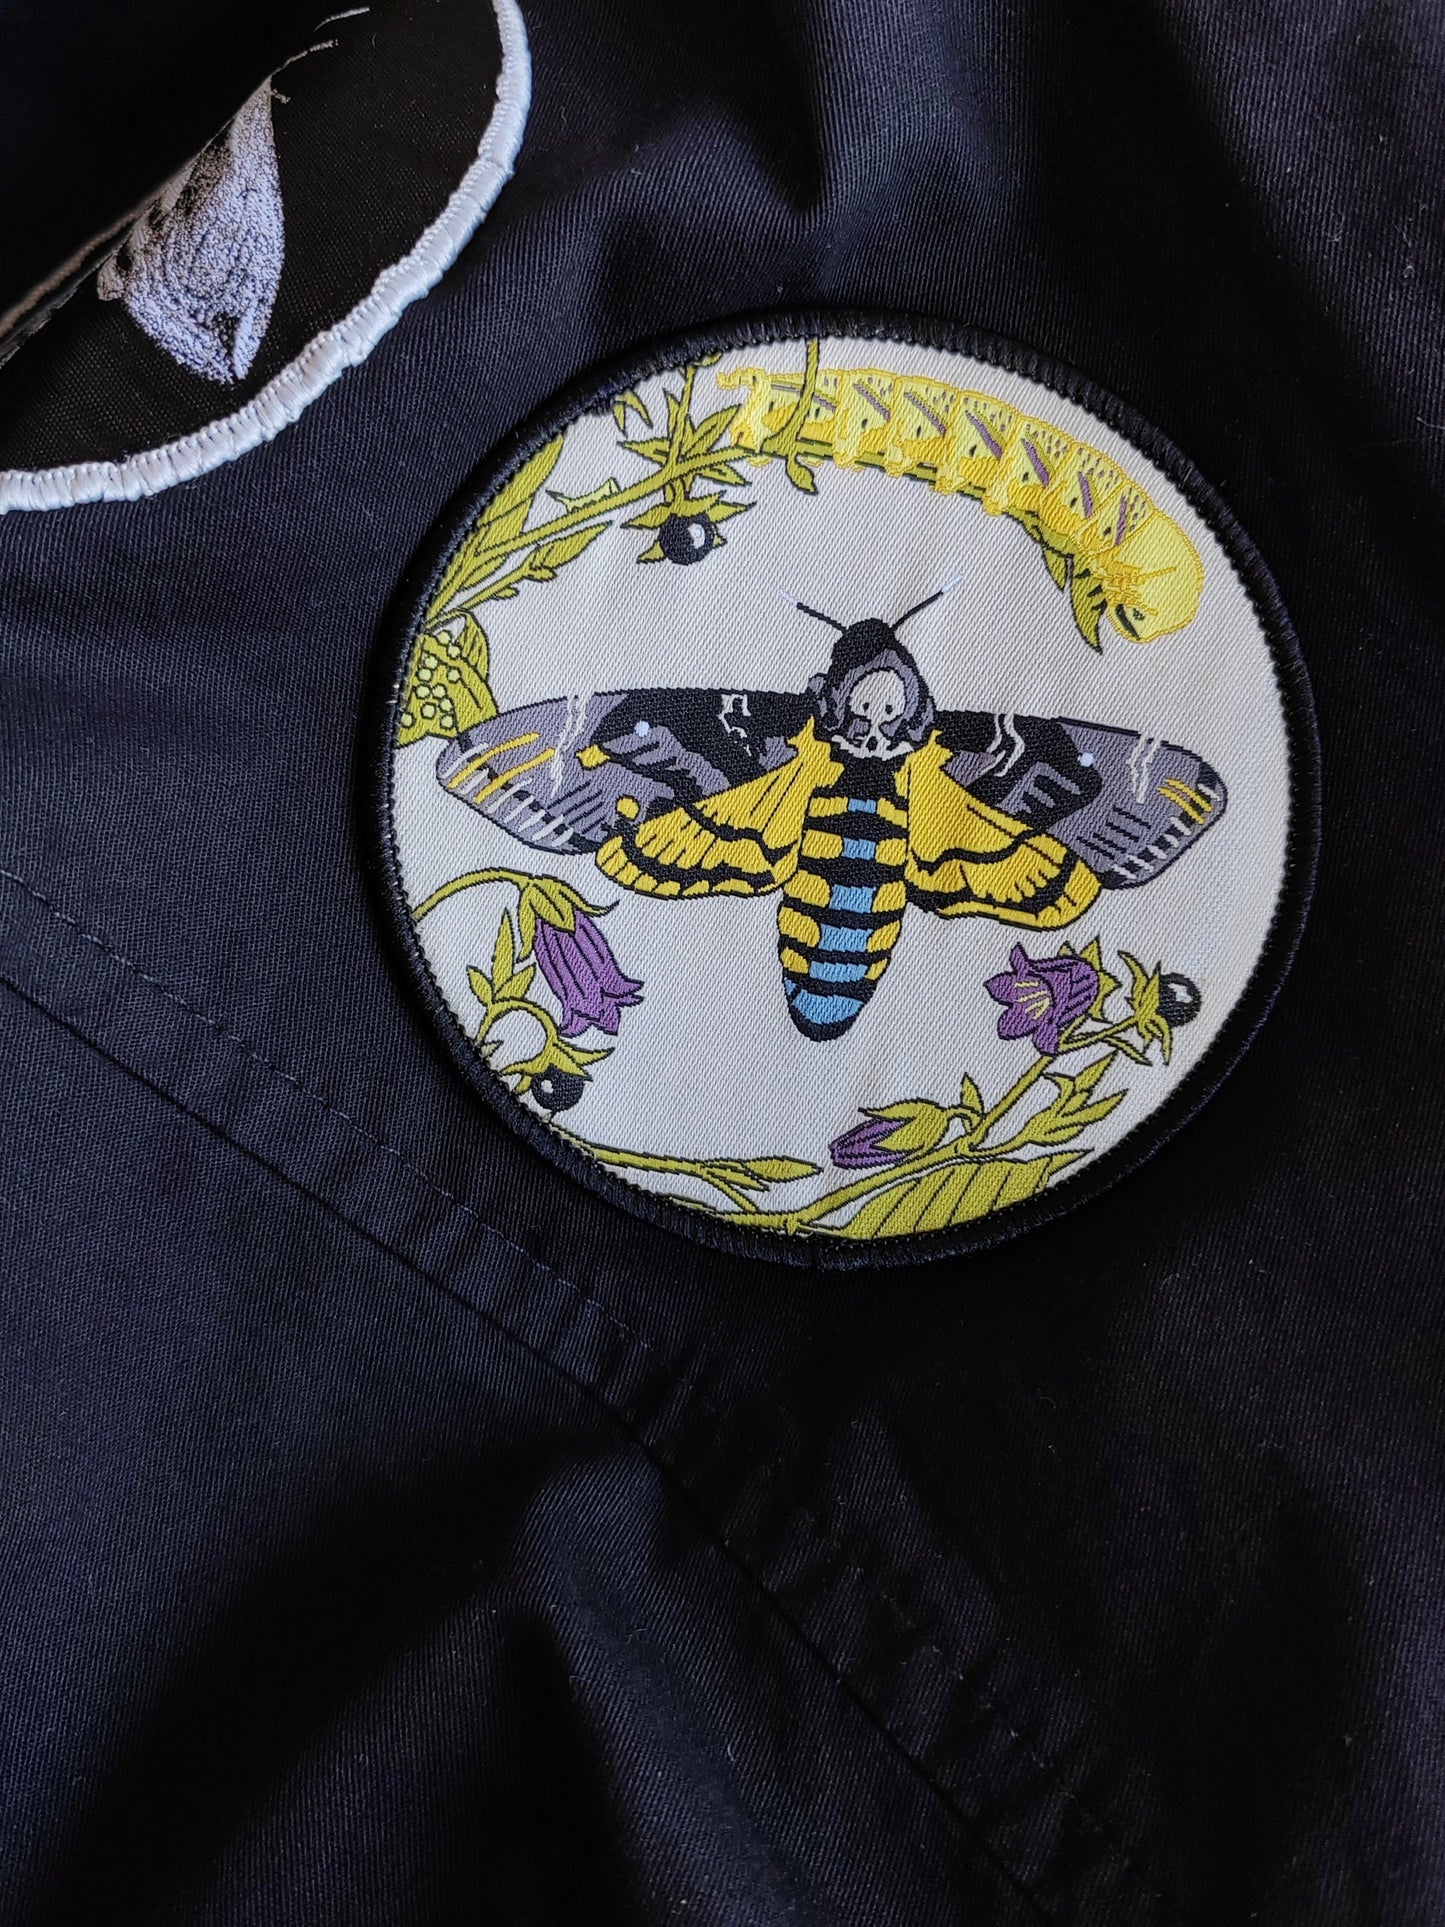 Sew on patch - Death's Head Hawk Moth, Acherontia atropos (lifecycle)